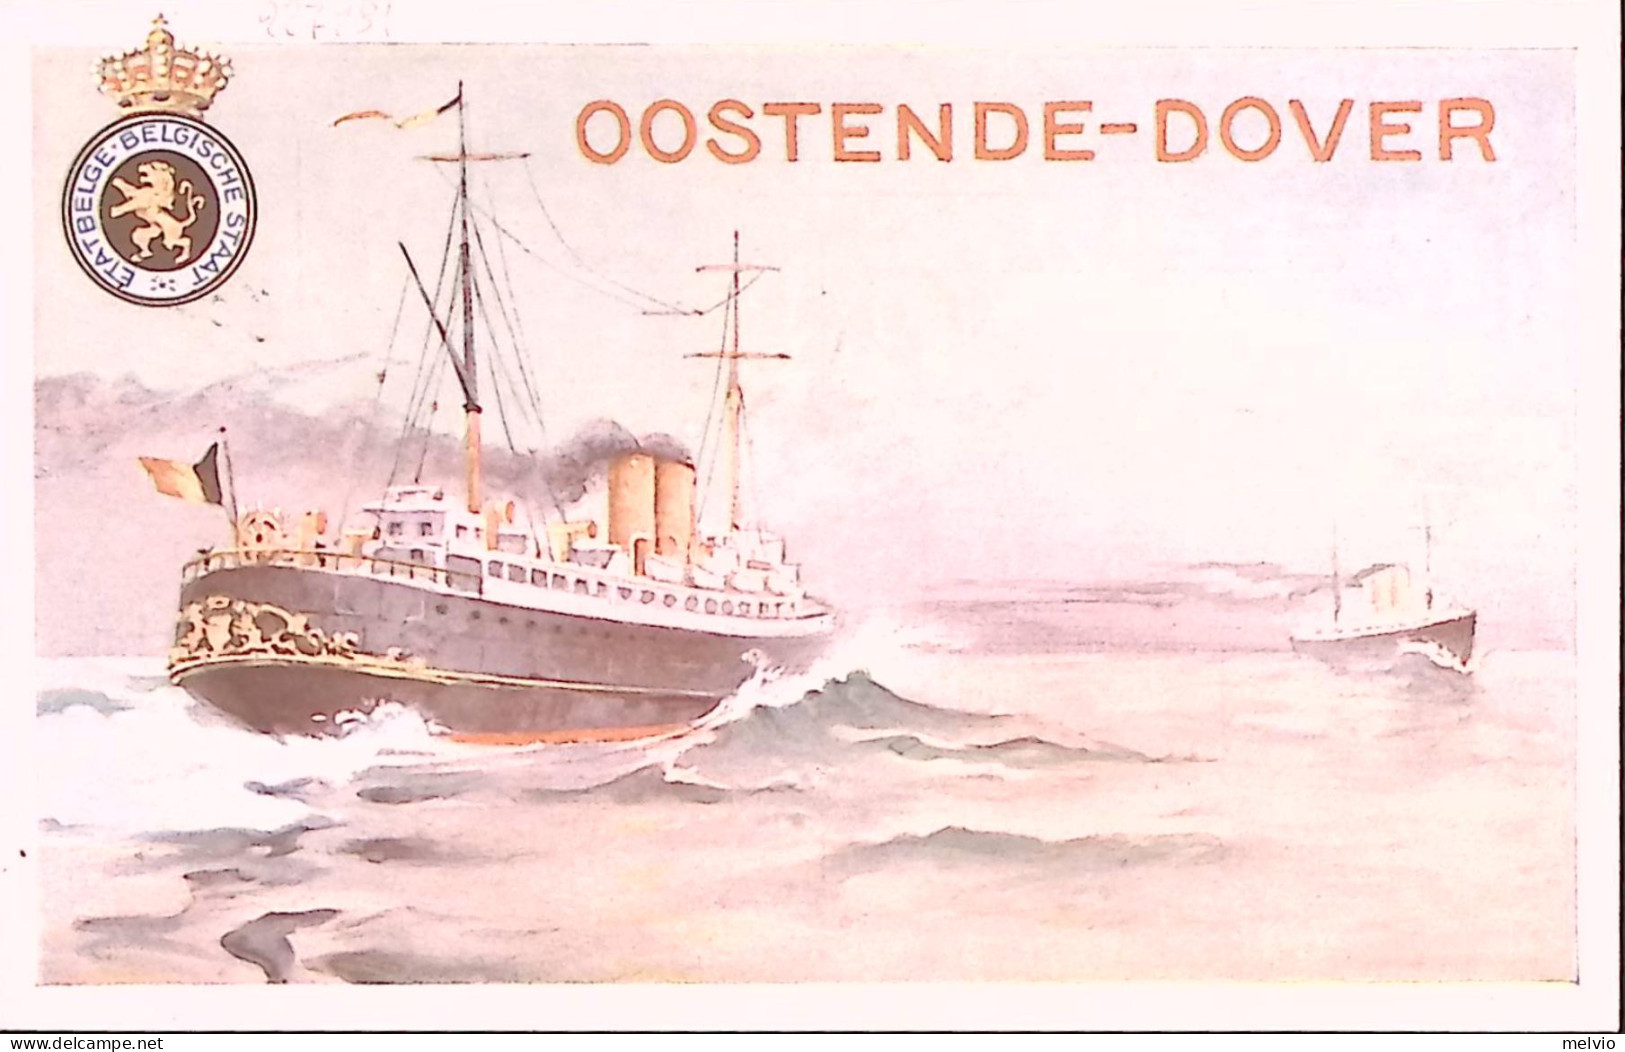 1924-Belgio Cartolina Postale C.5/30 Pubblicitaria OOSTENDE-DOVER, Nuova - Publicité